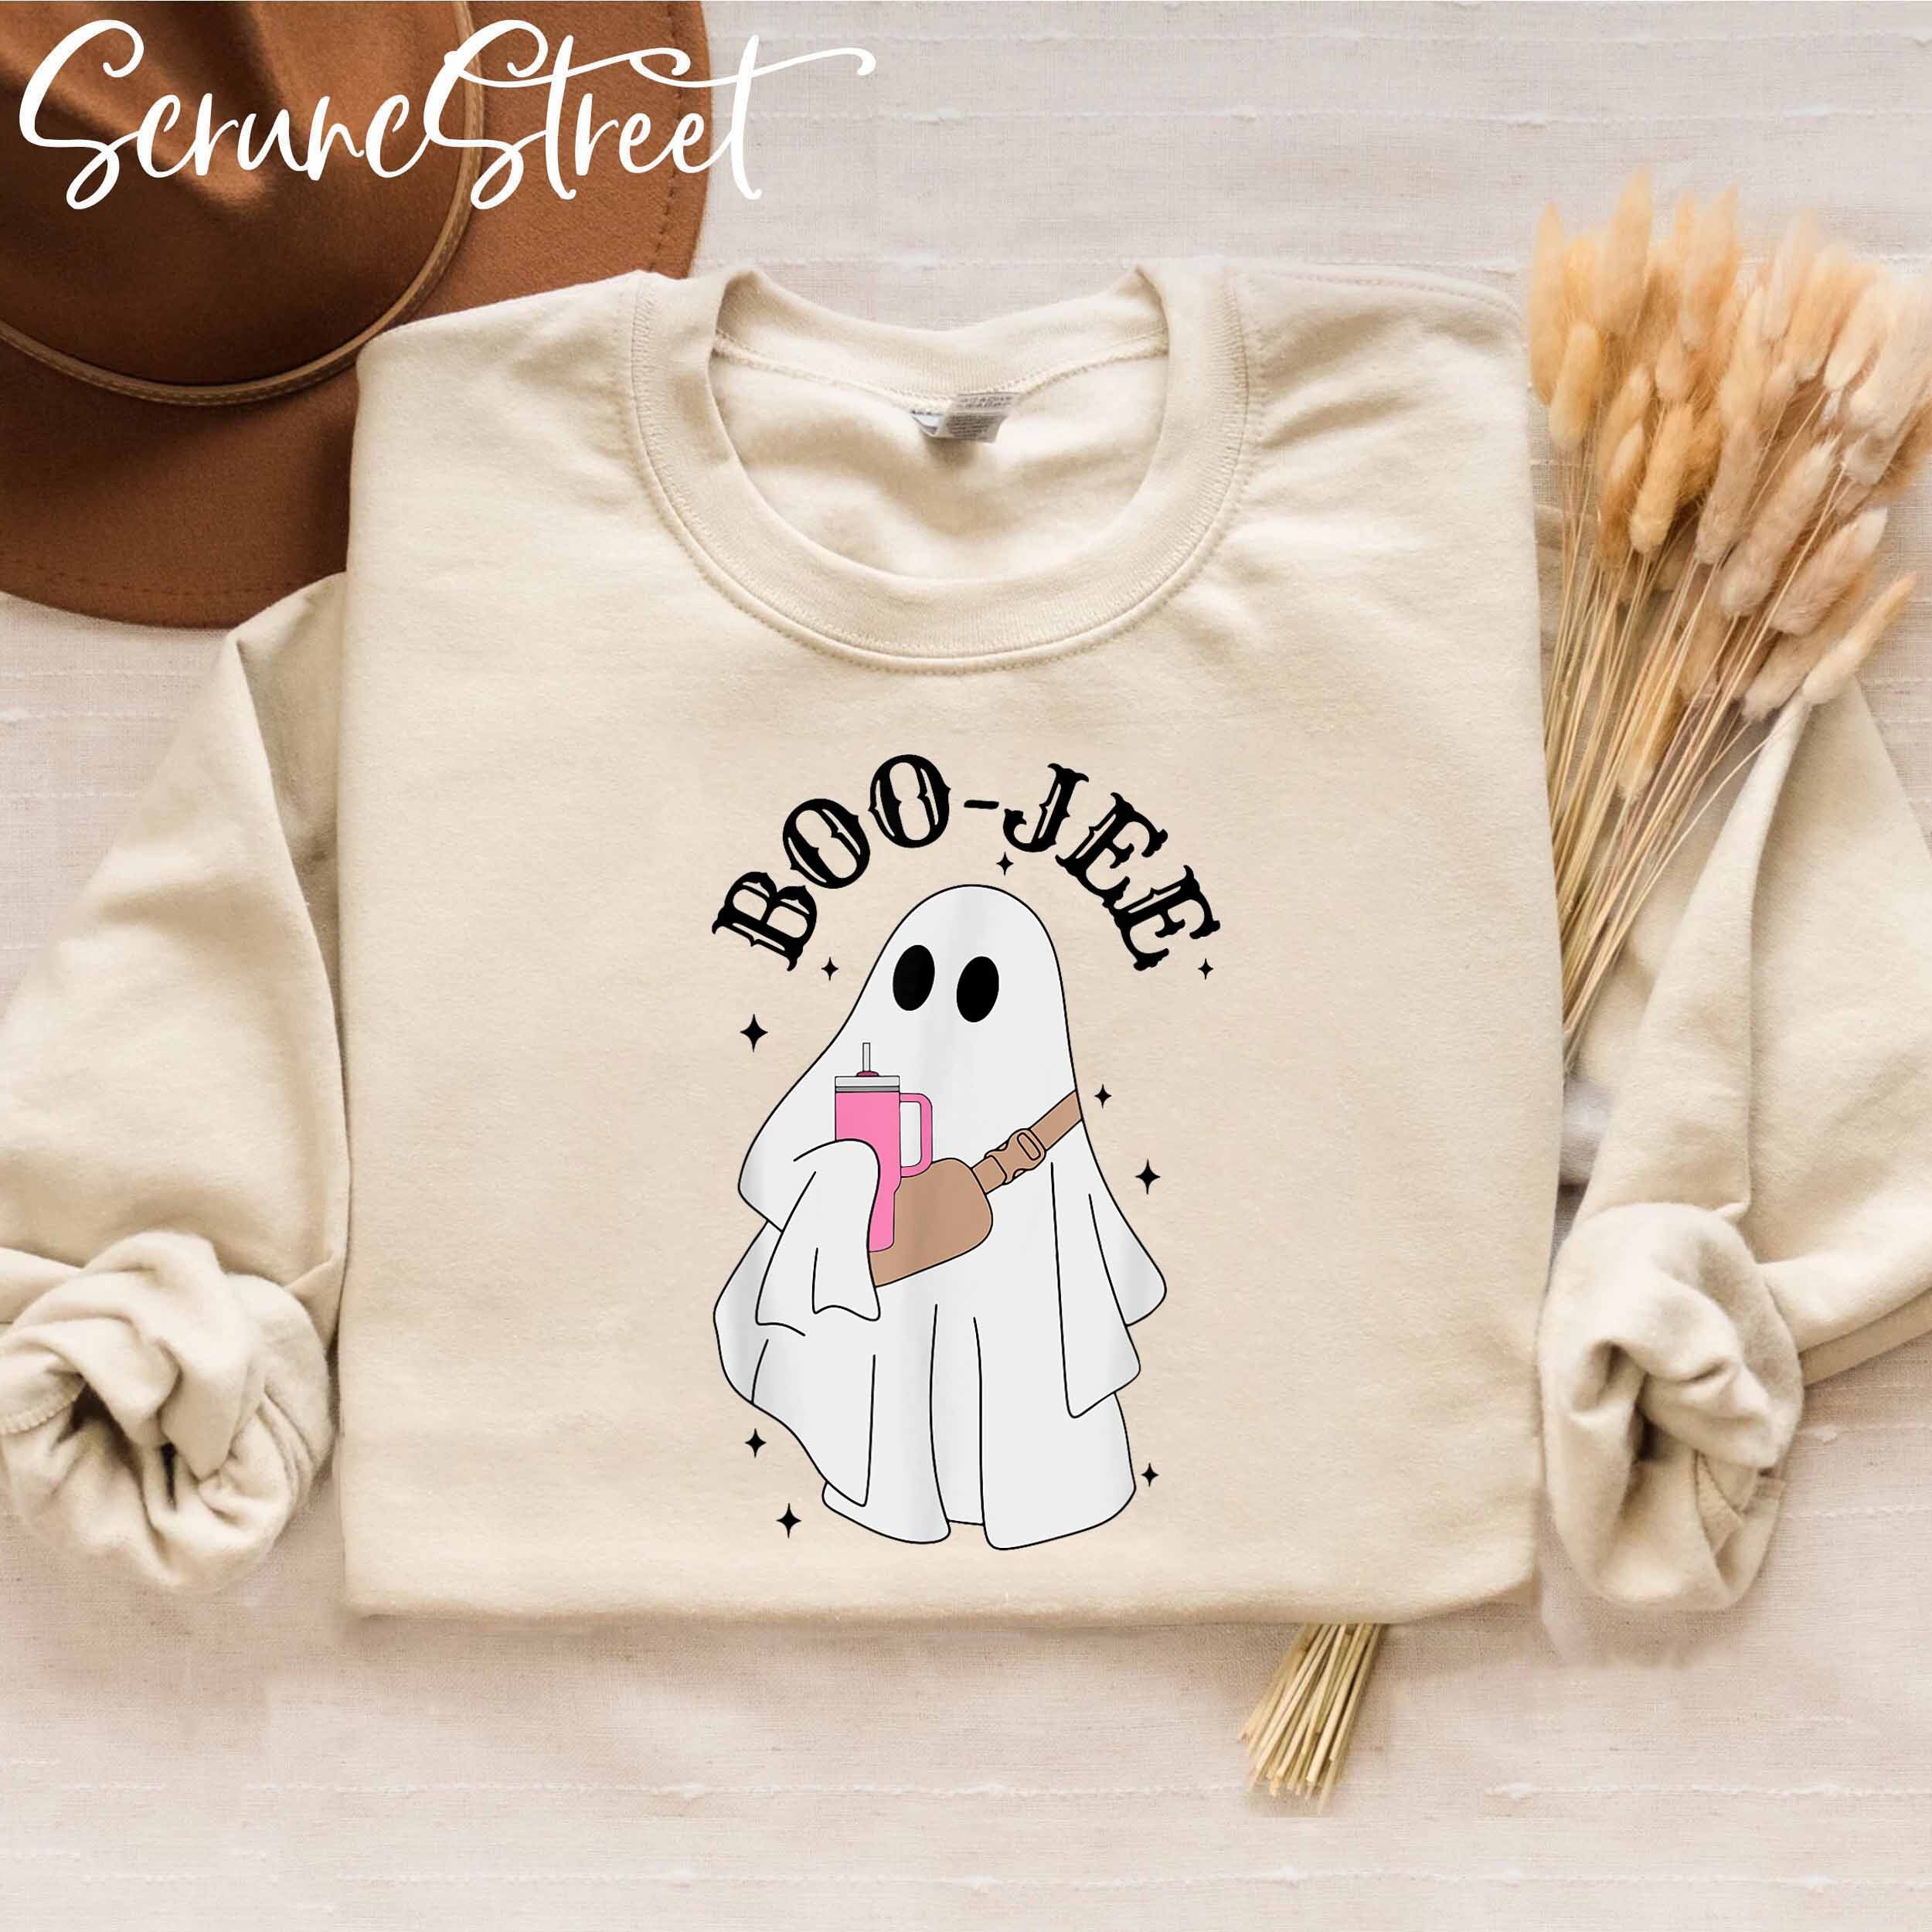 Funny Halloween Ghost Sweatshirt Boojee Ghost Shirt 